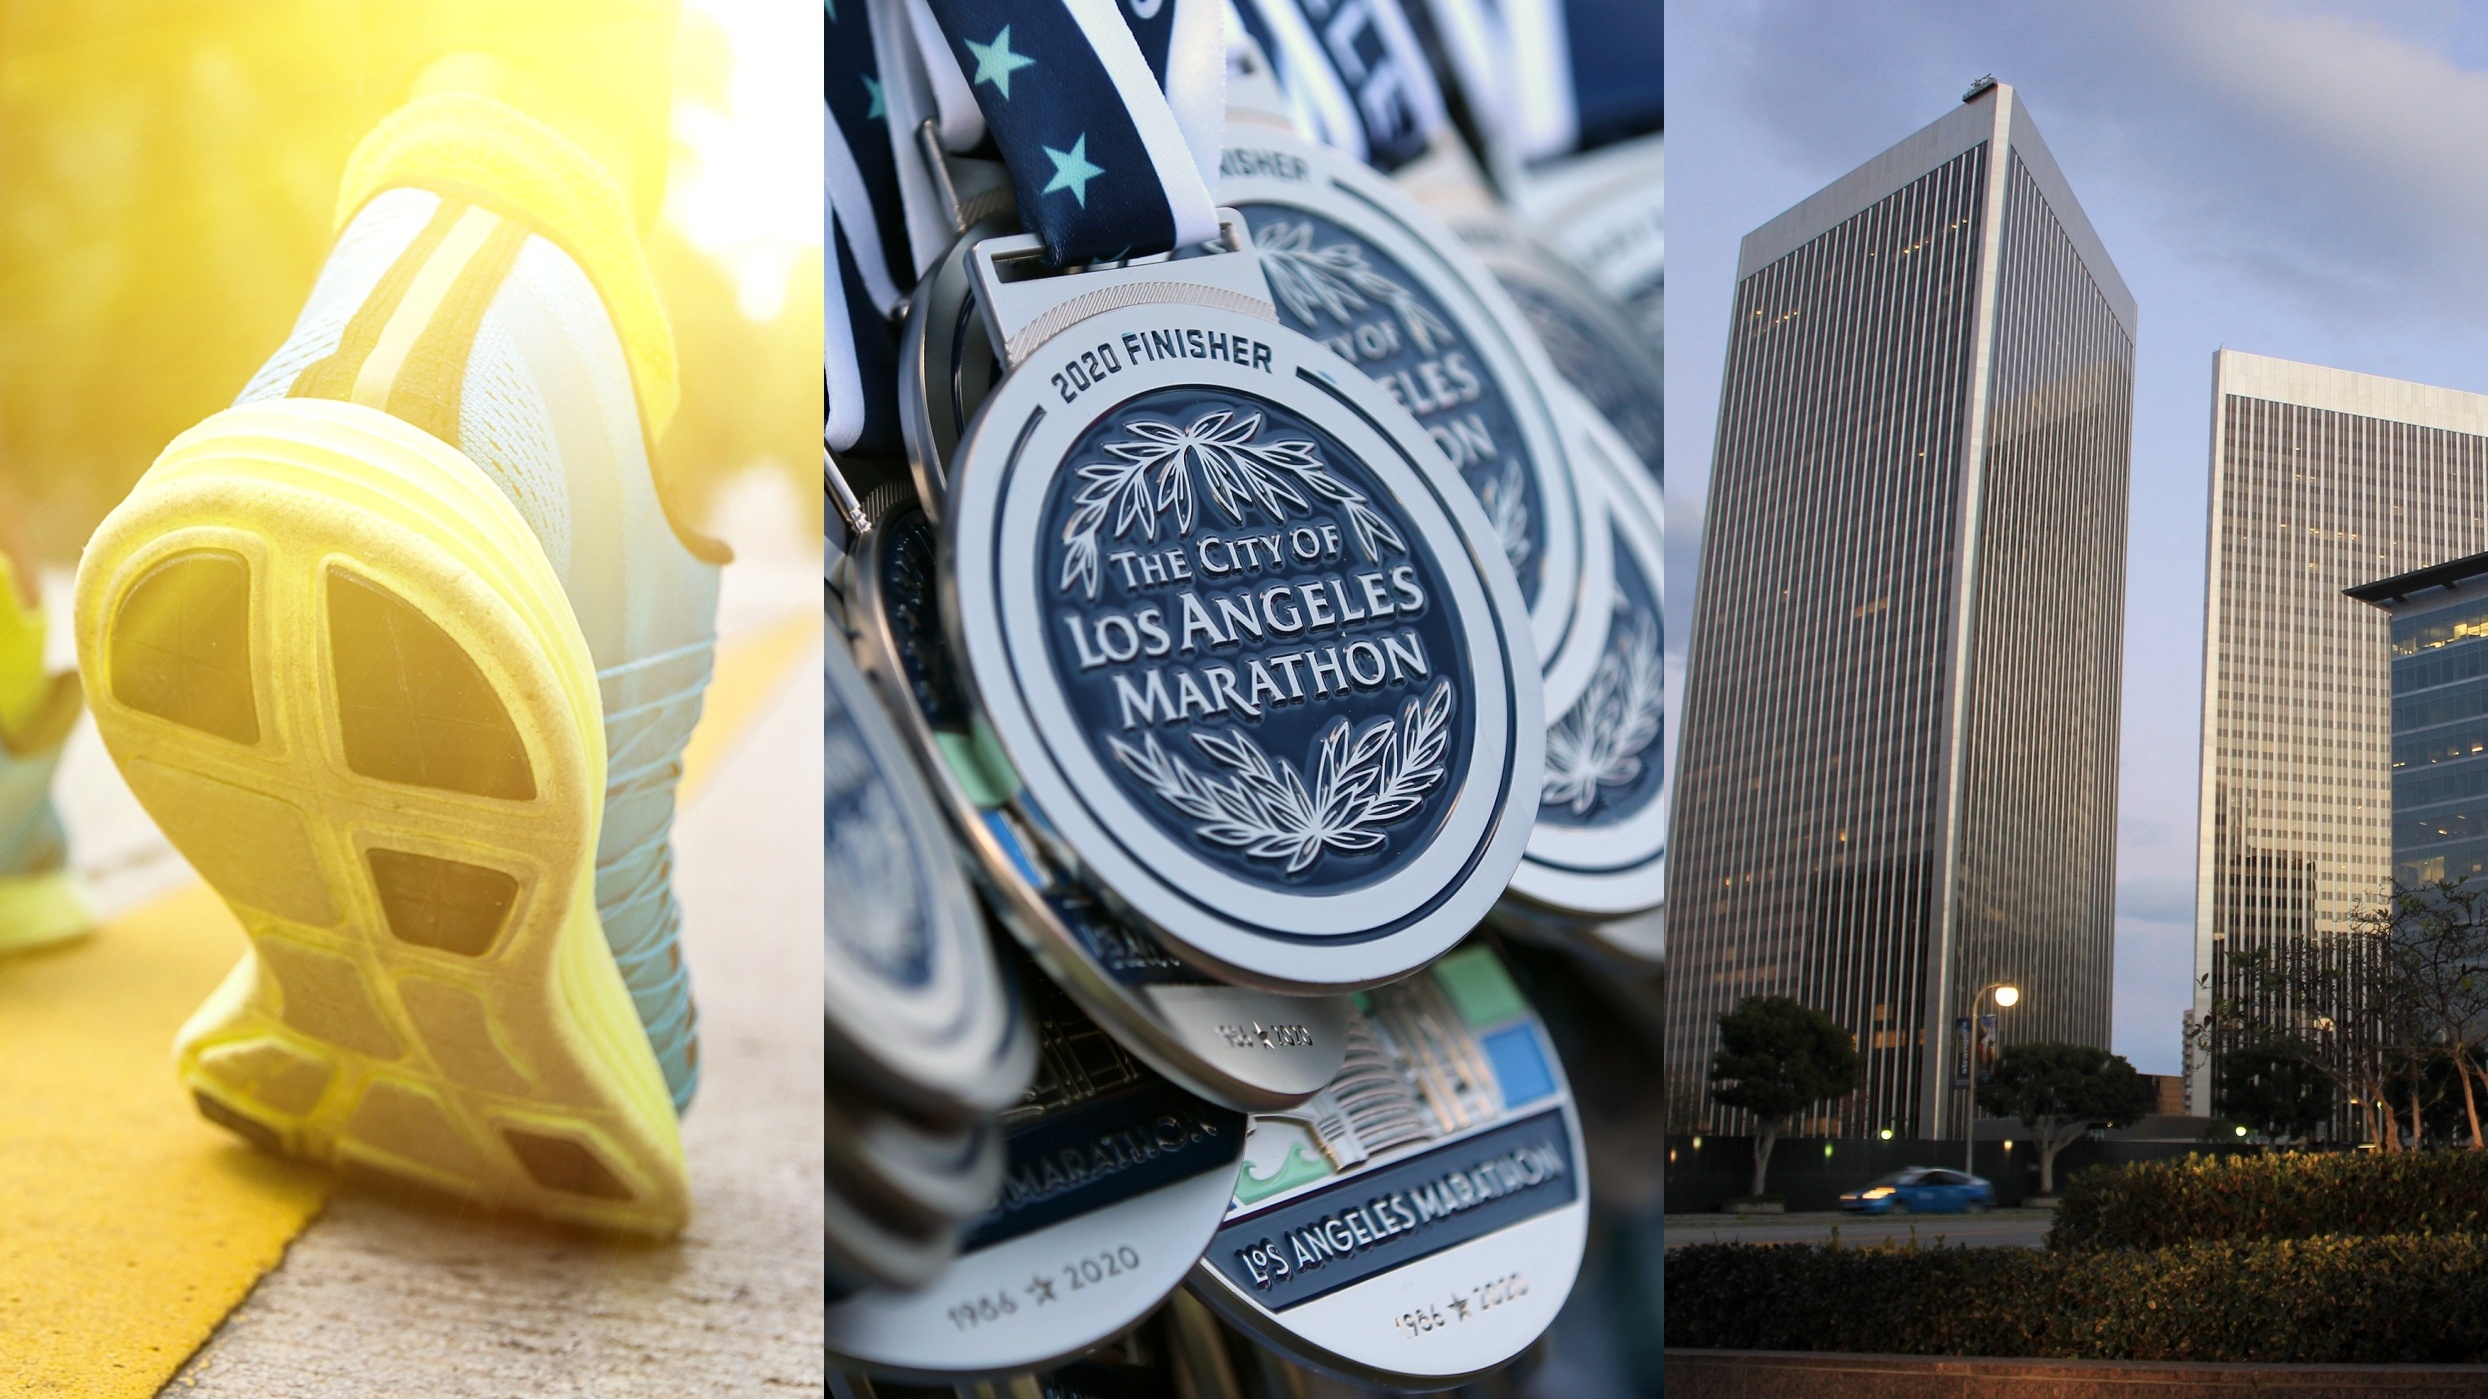 LA Marathon Comes Through Beverly Hills - Beverly Hills Courier